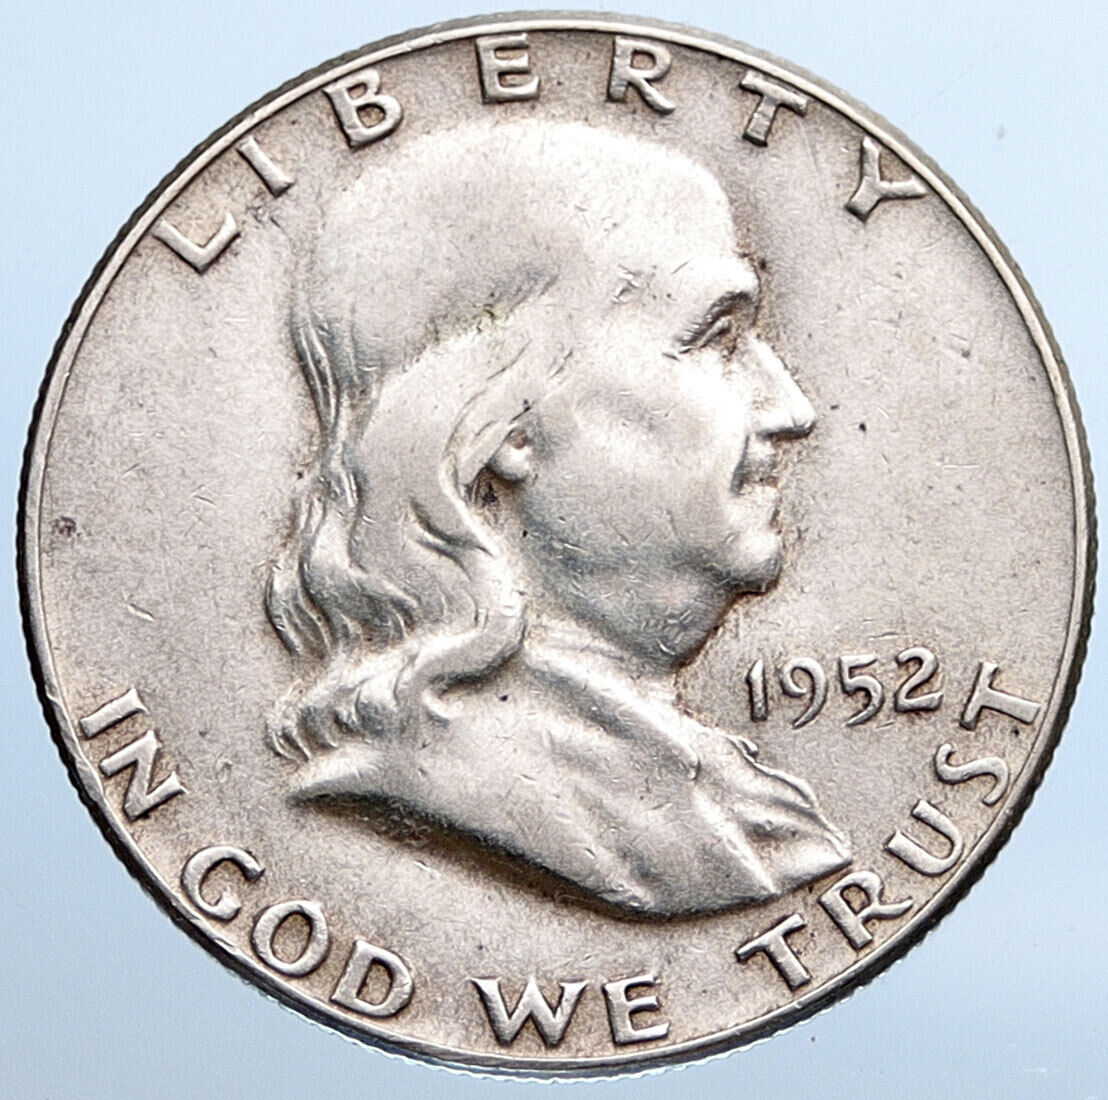 1952 P US Benjamin Franklin VINTAGE Silver Half Dollar Coin LIBERTY BELL i115261